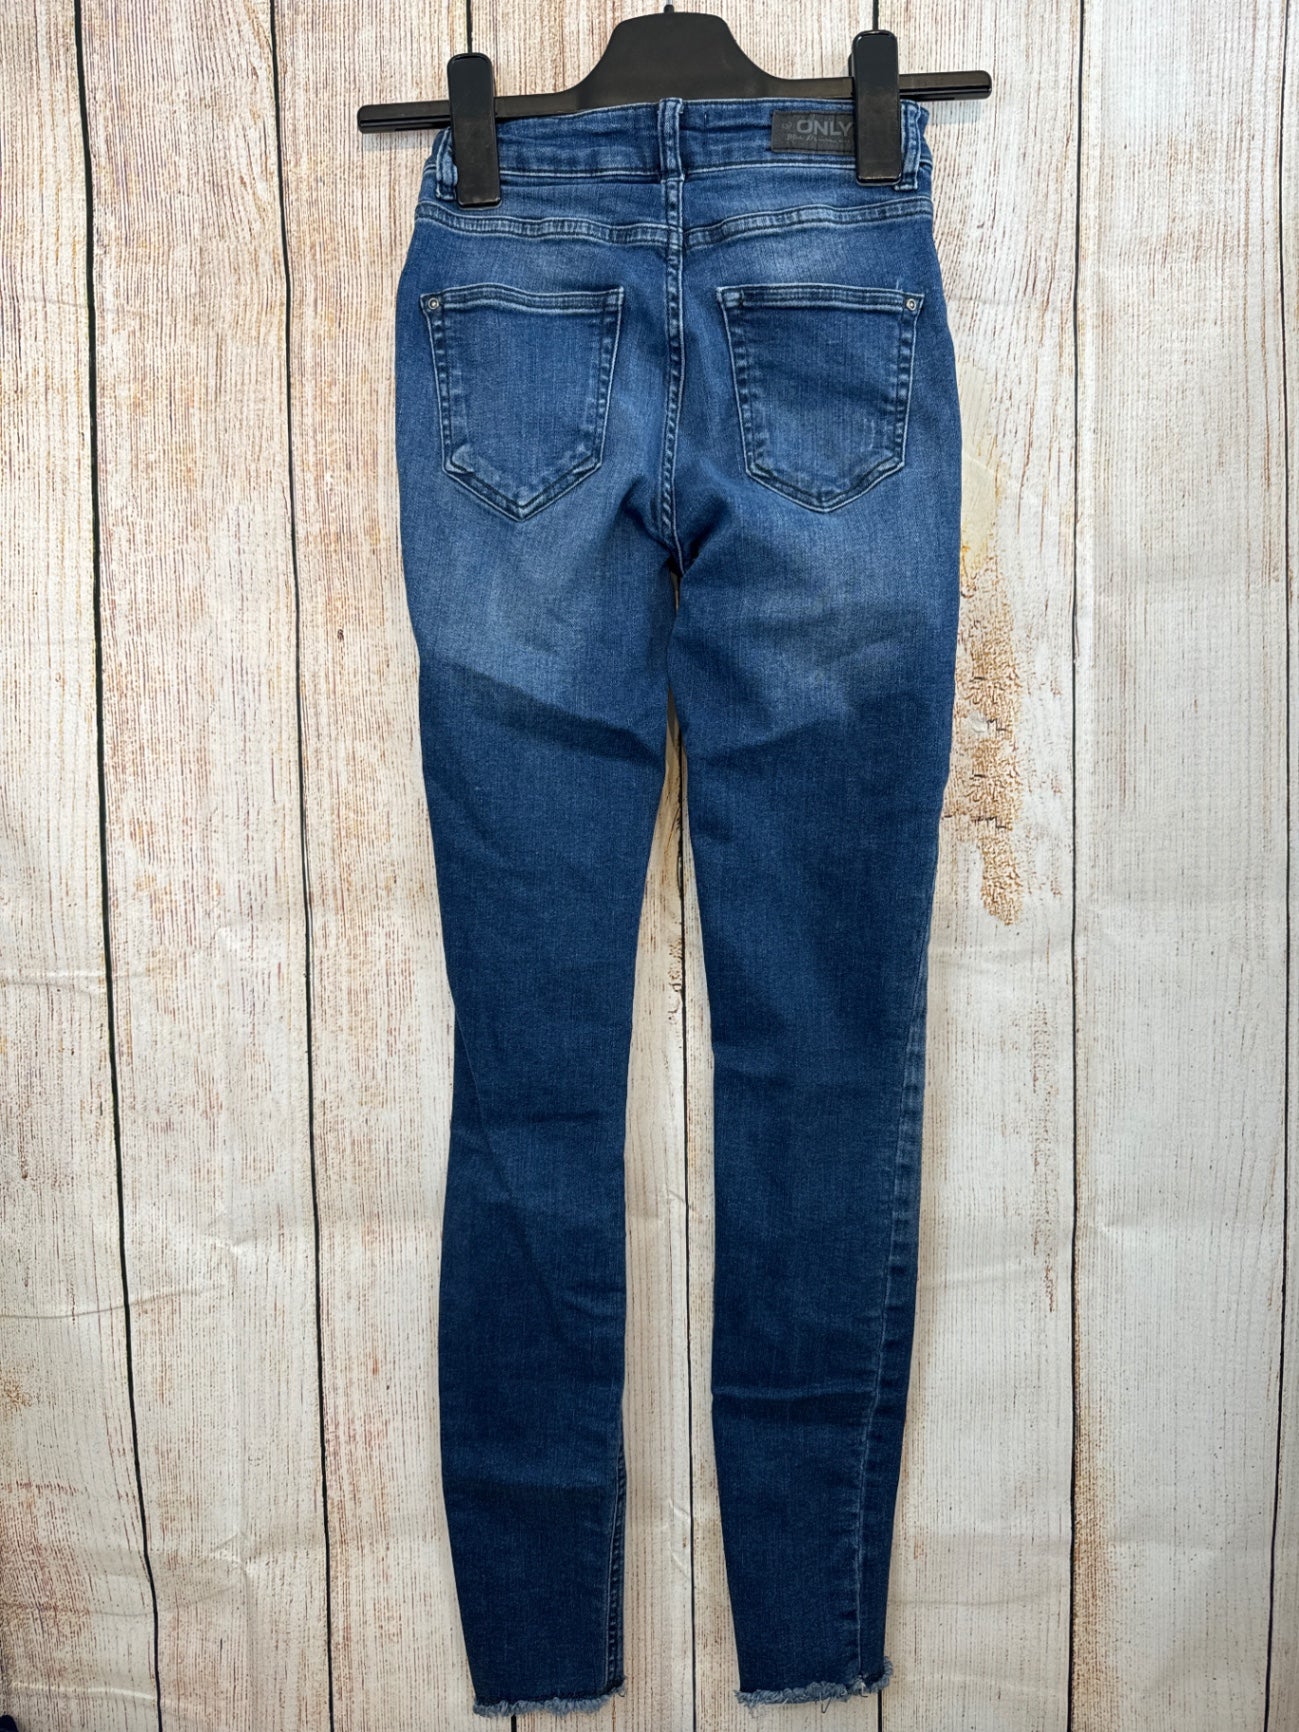 Only Jeans jeansblau Gr. XS